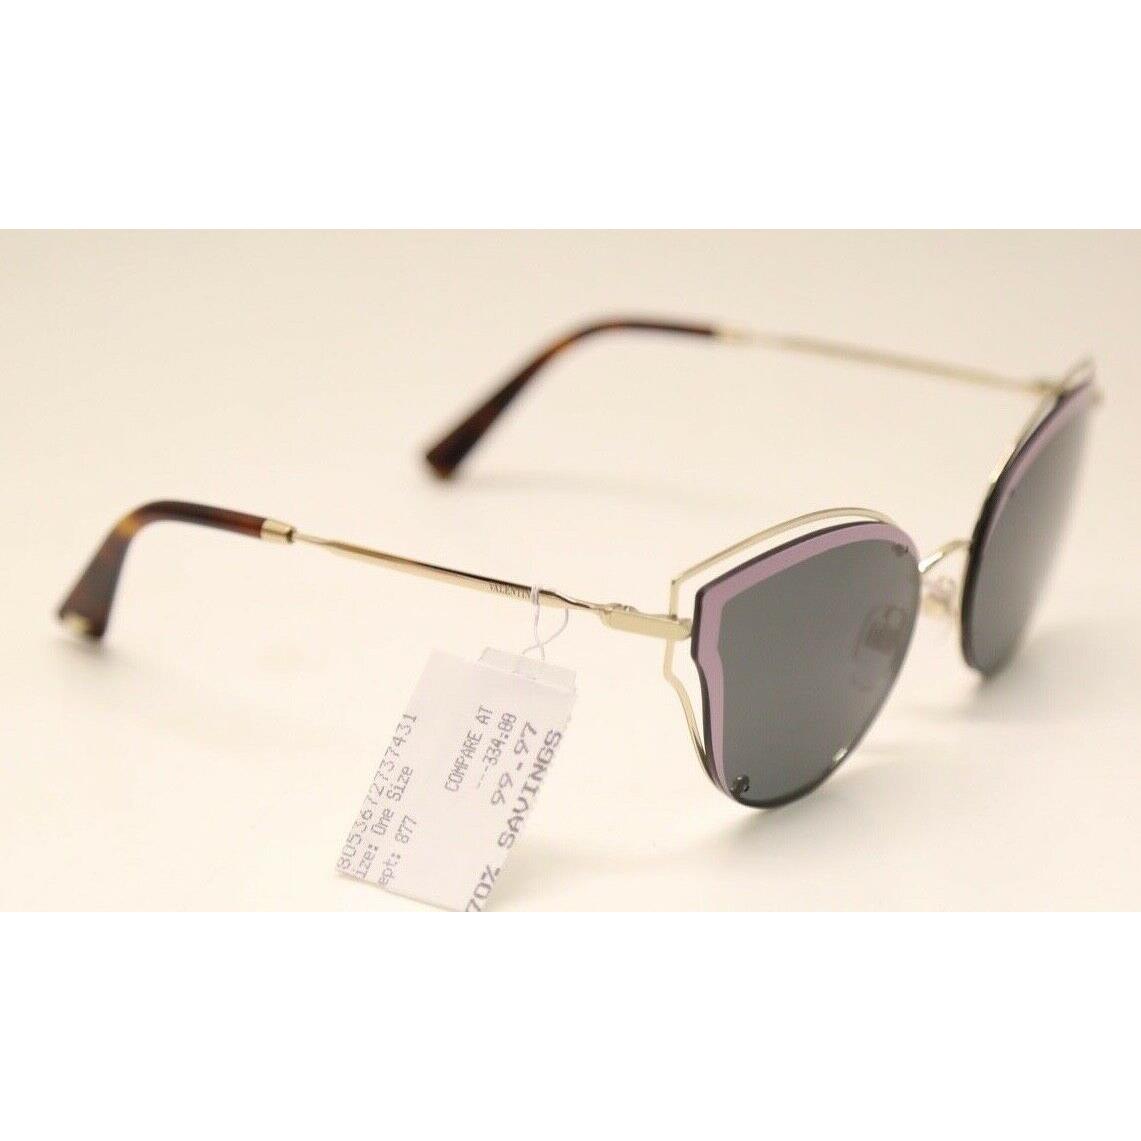 Valentino sunglasses  - PINK/GOLD Frame, Gray Lens 0